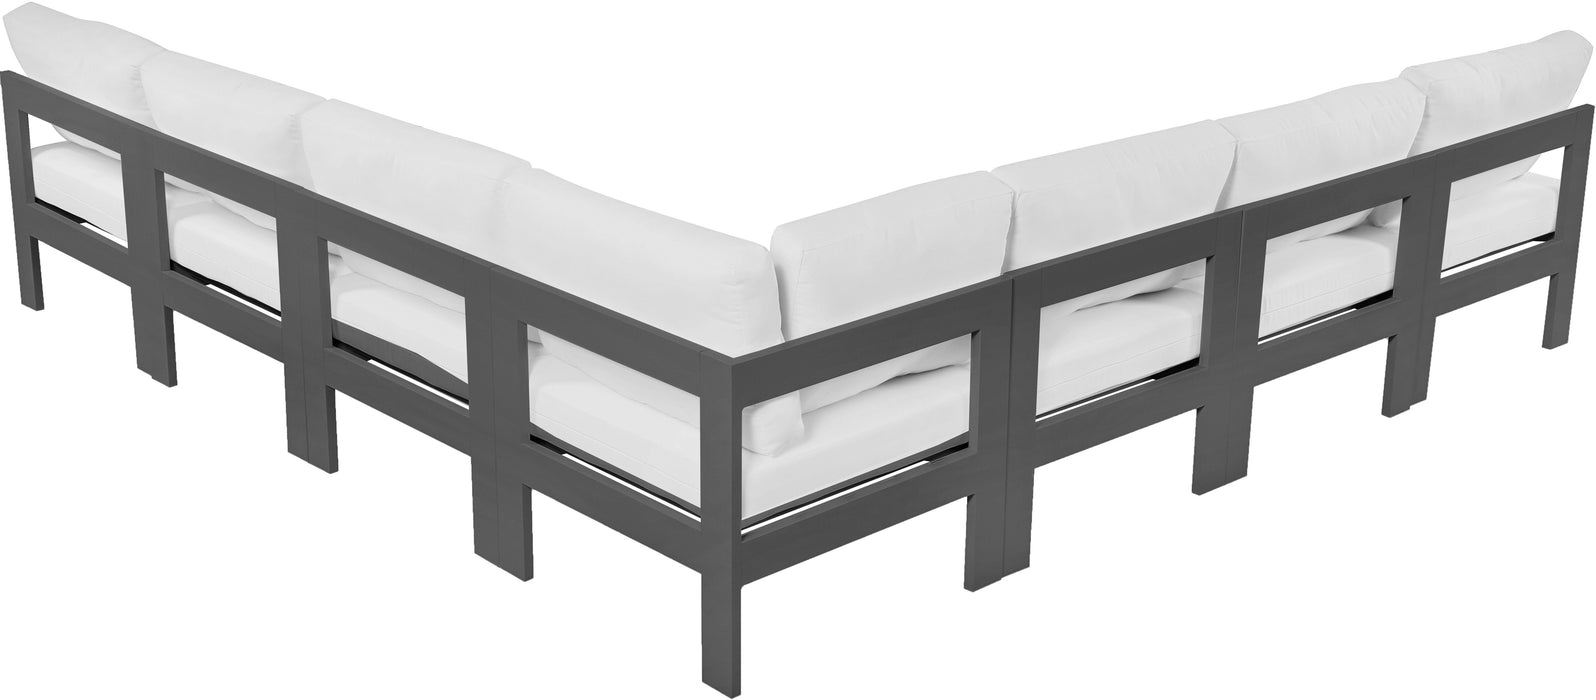 Nizuc - Outdoor Patio Modular Sectional 7 Piece - White - Fabric - Modern & Contemporary